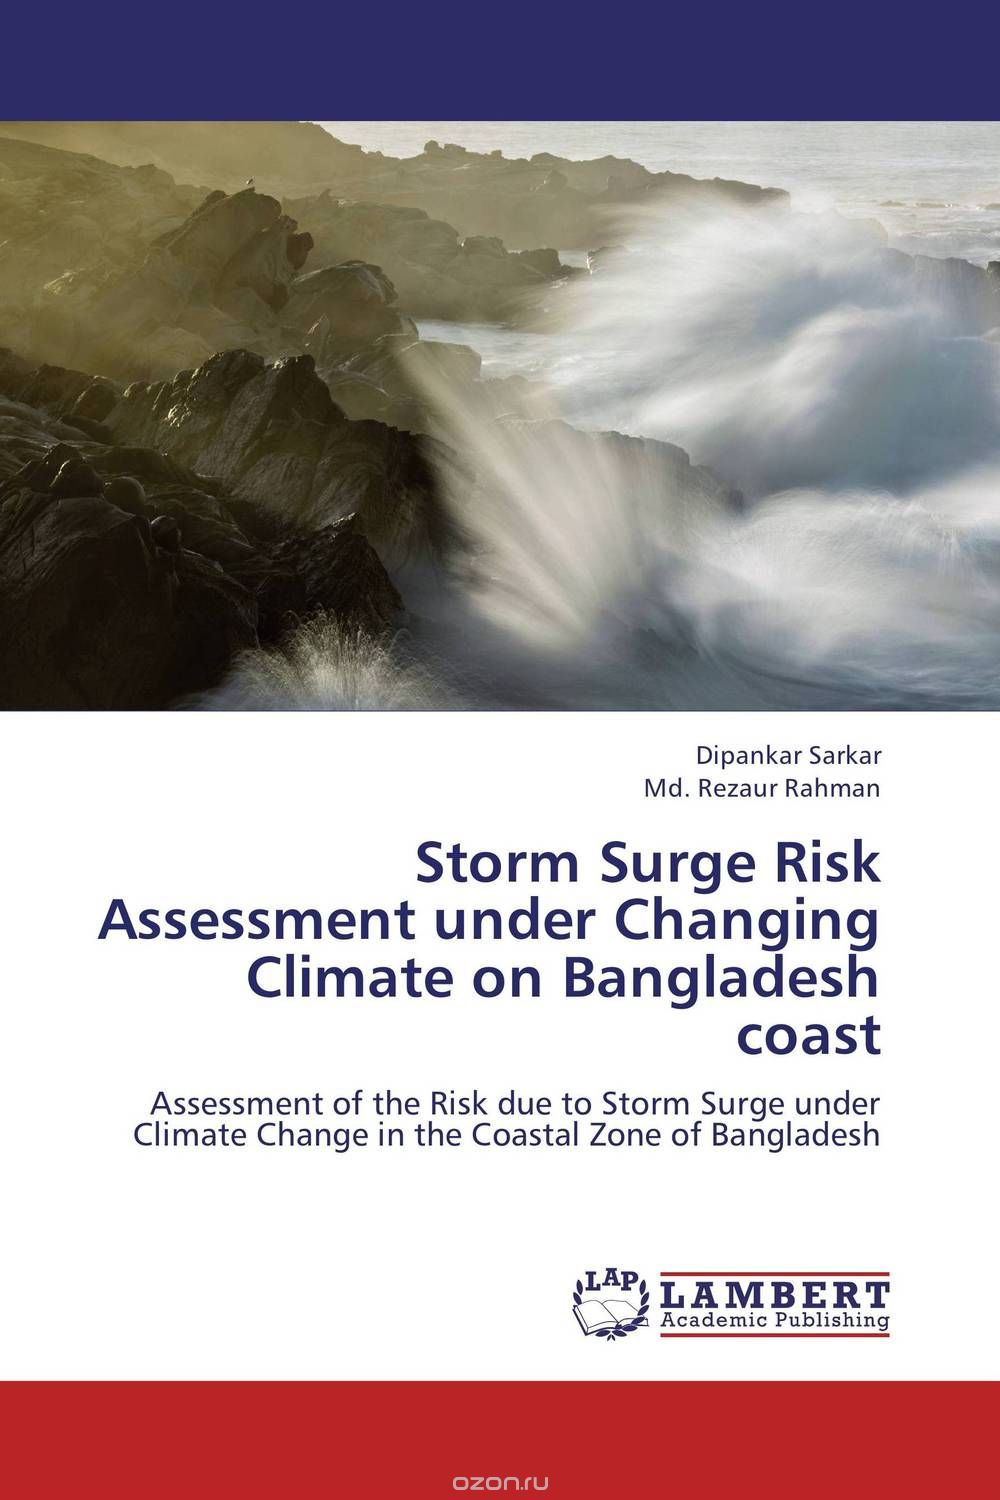 Скачать книгу "Storm Surge Risk Assessment under Changing Climate on Bangladesh coast"